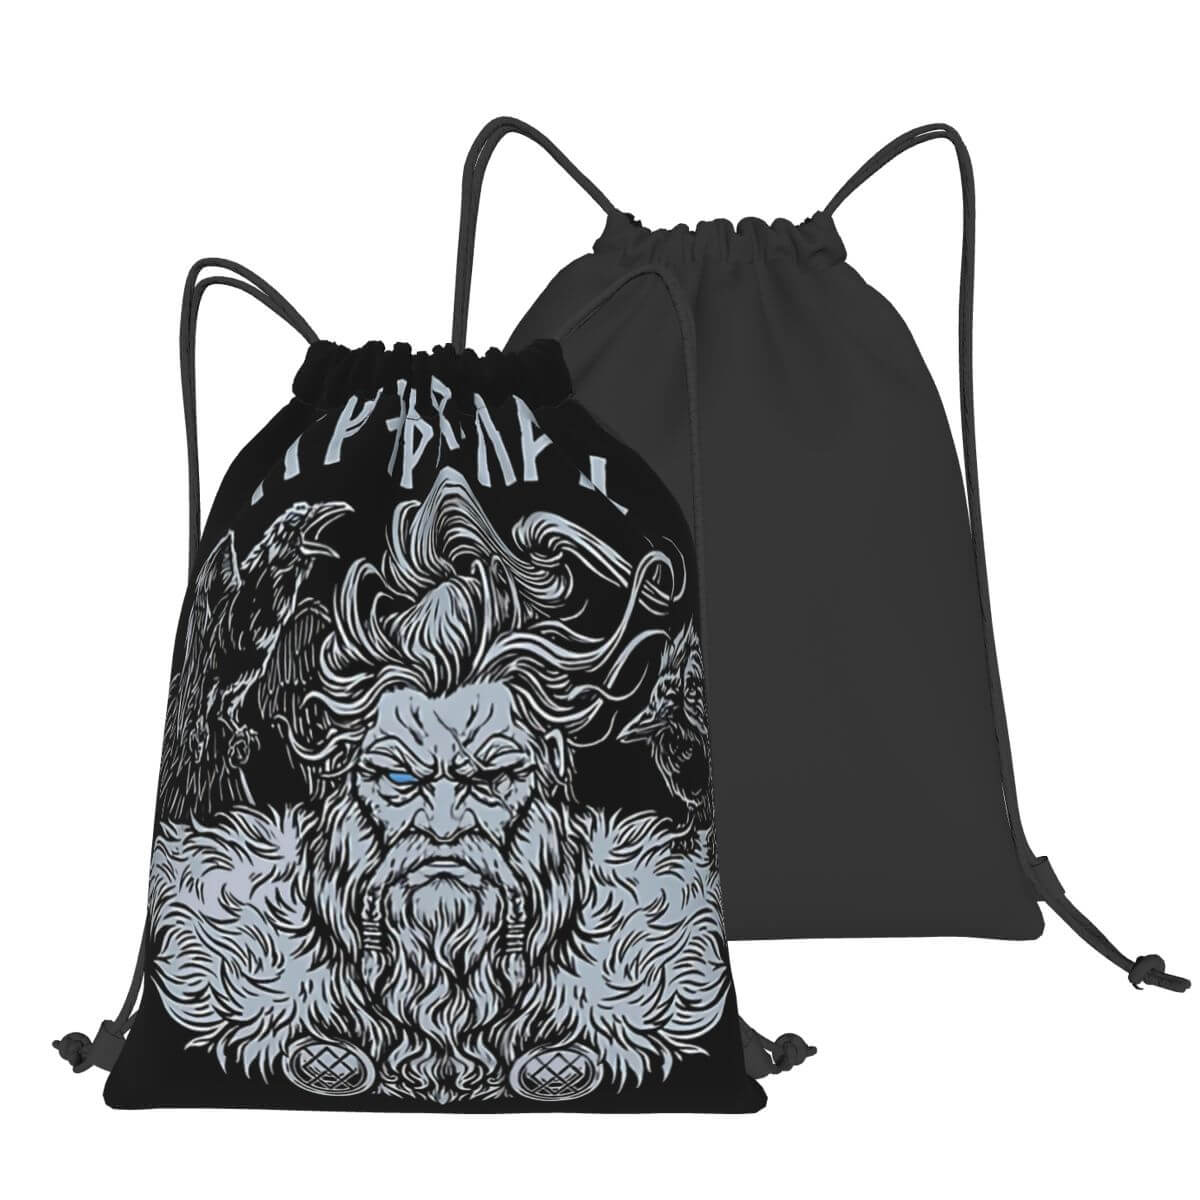 Allfather Odin Drawstring Bag